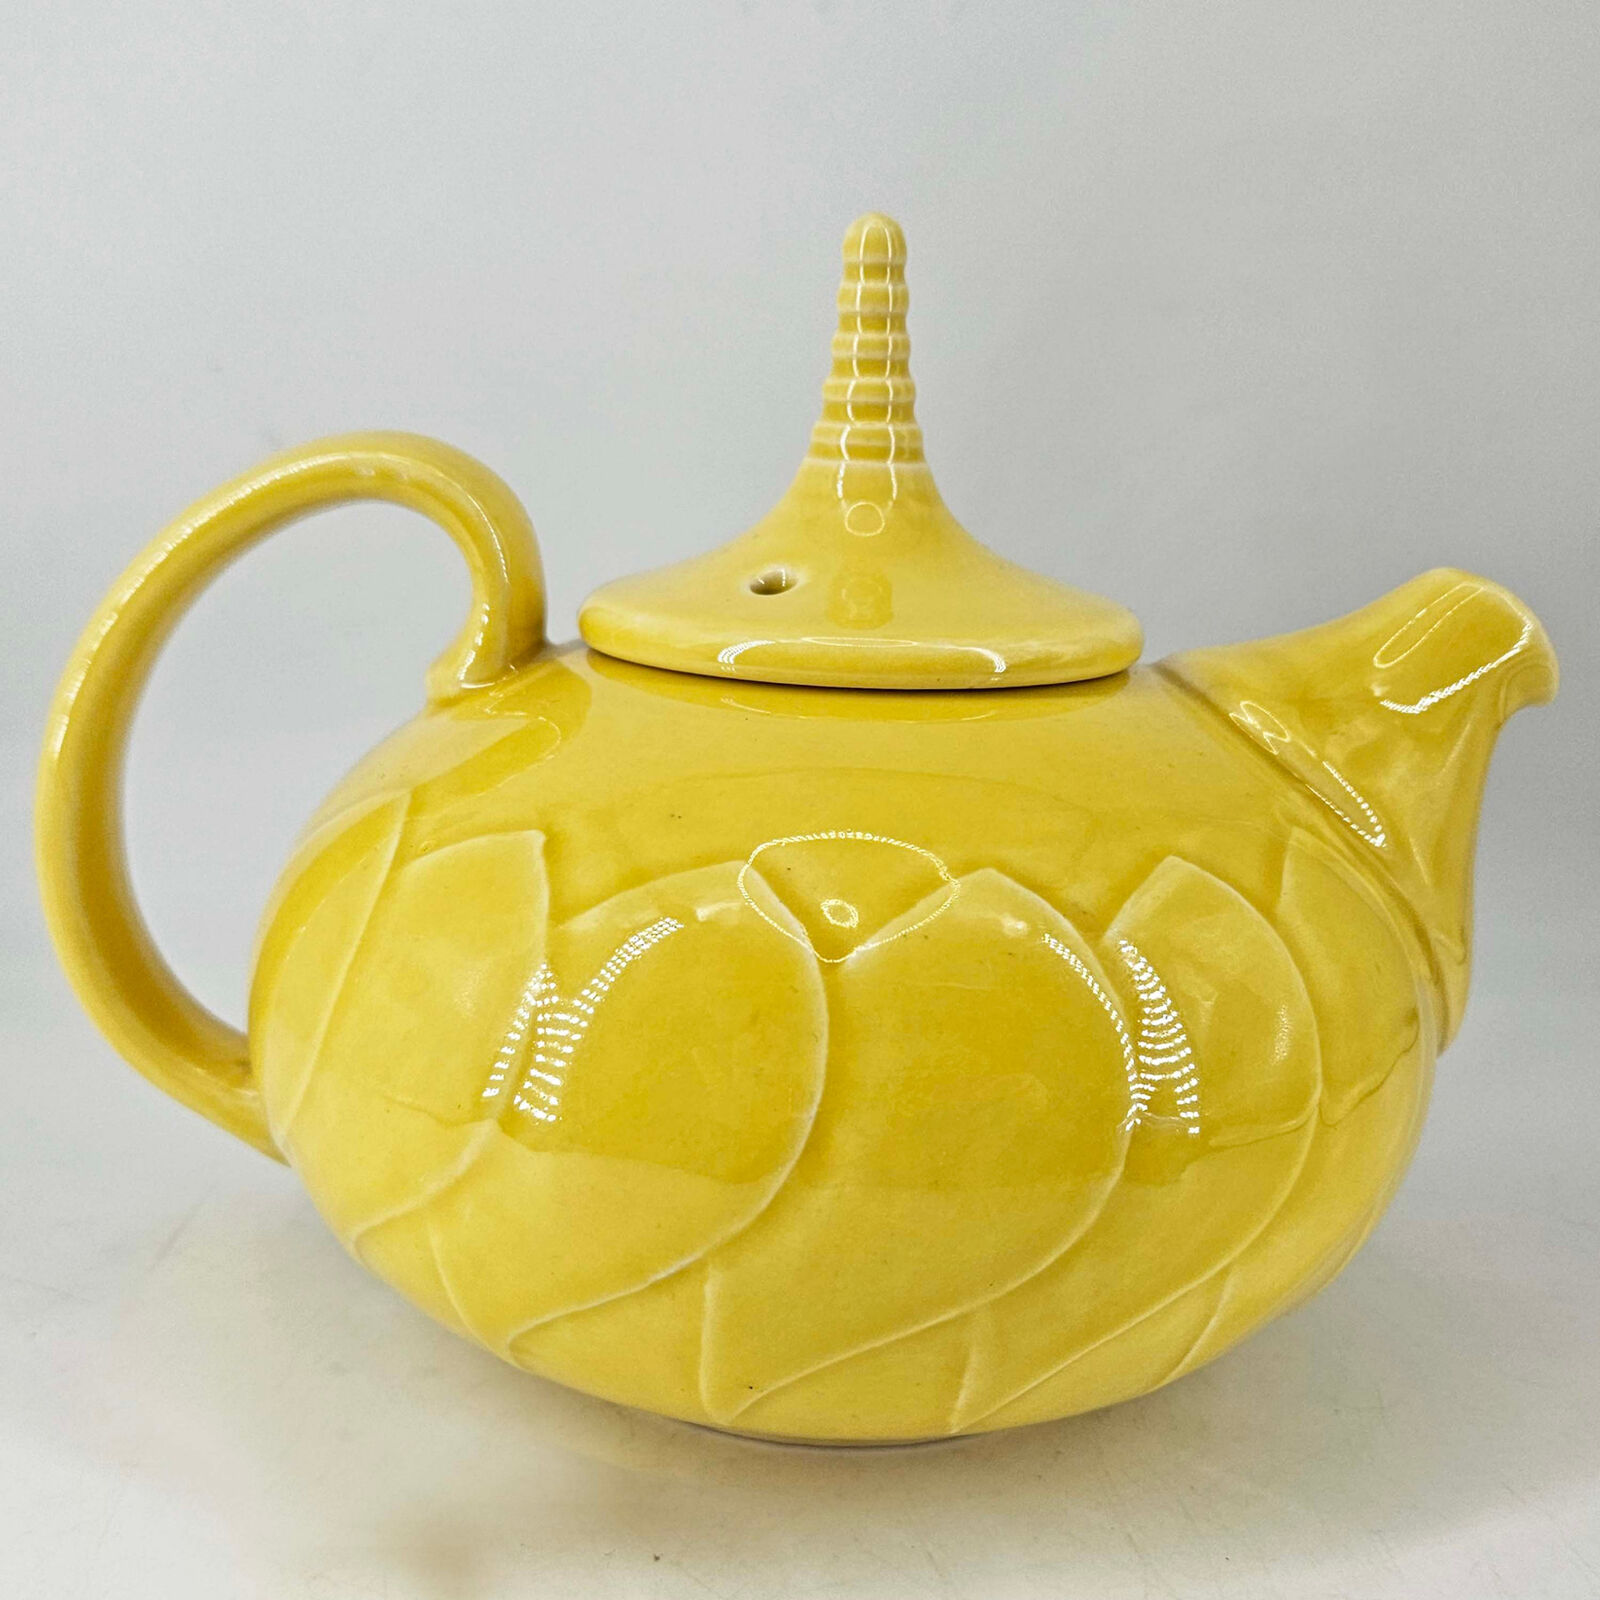 Vintage Studio art signed Eben yellow ceramic teapot